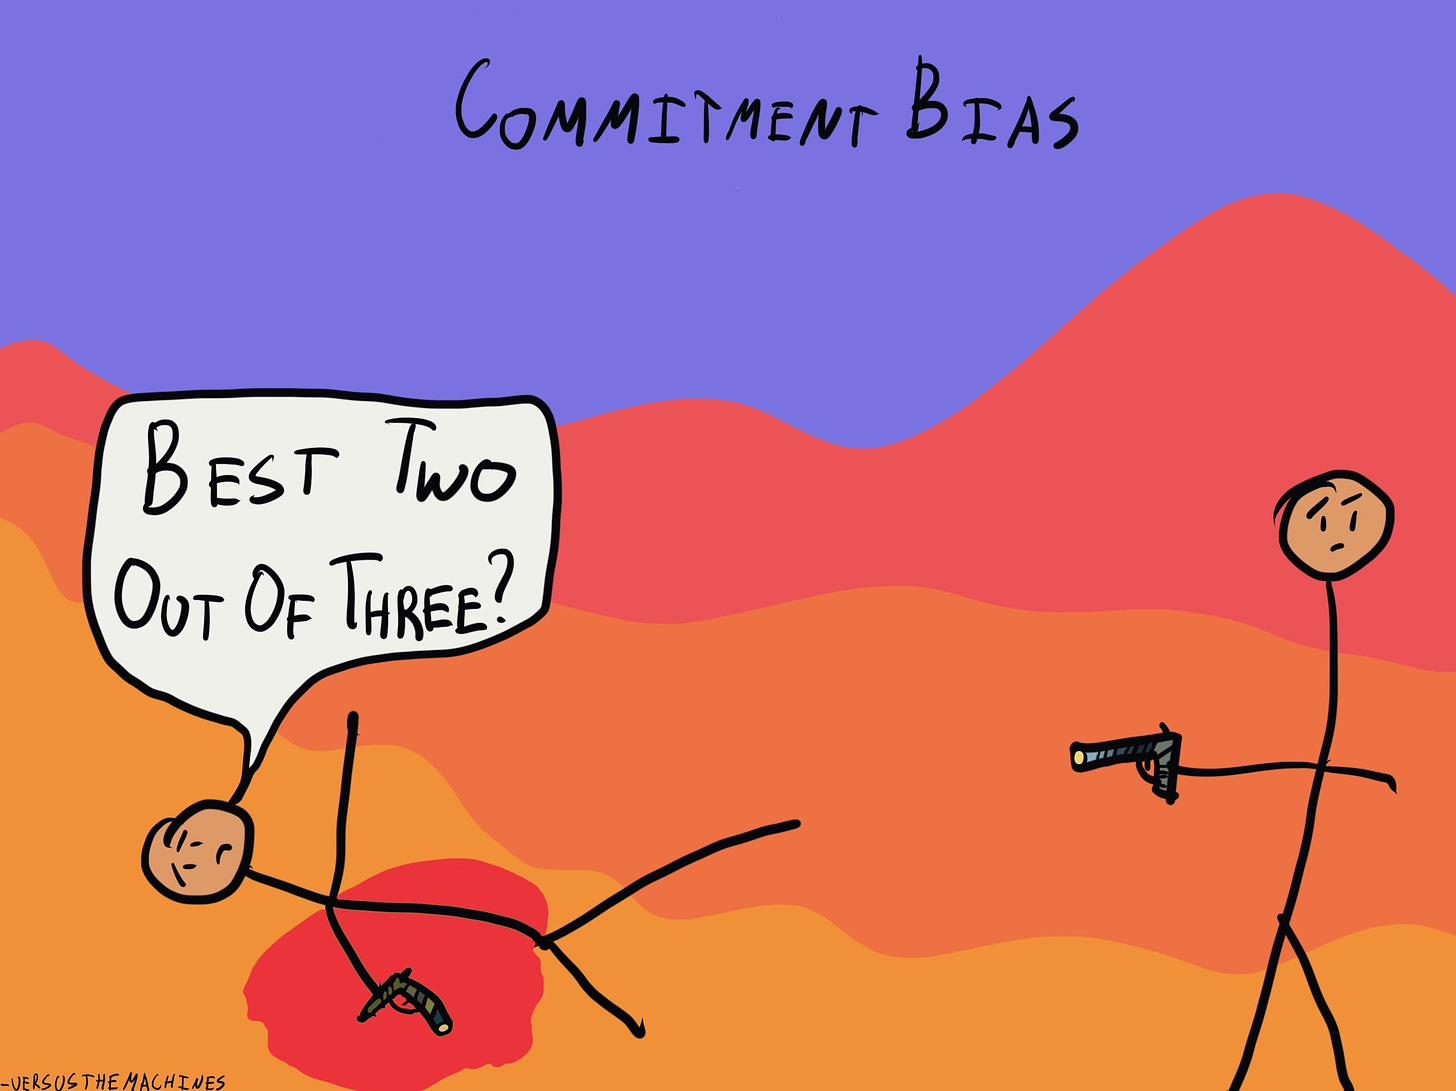 Commitment bias